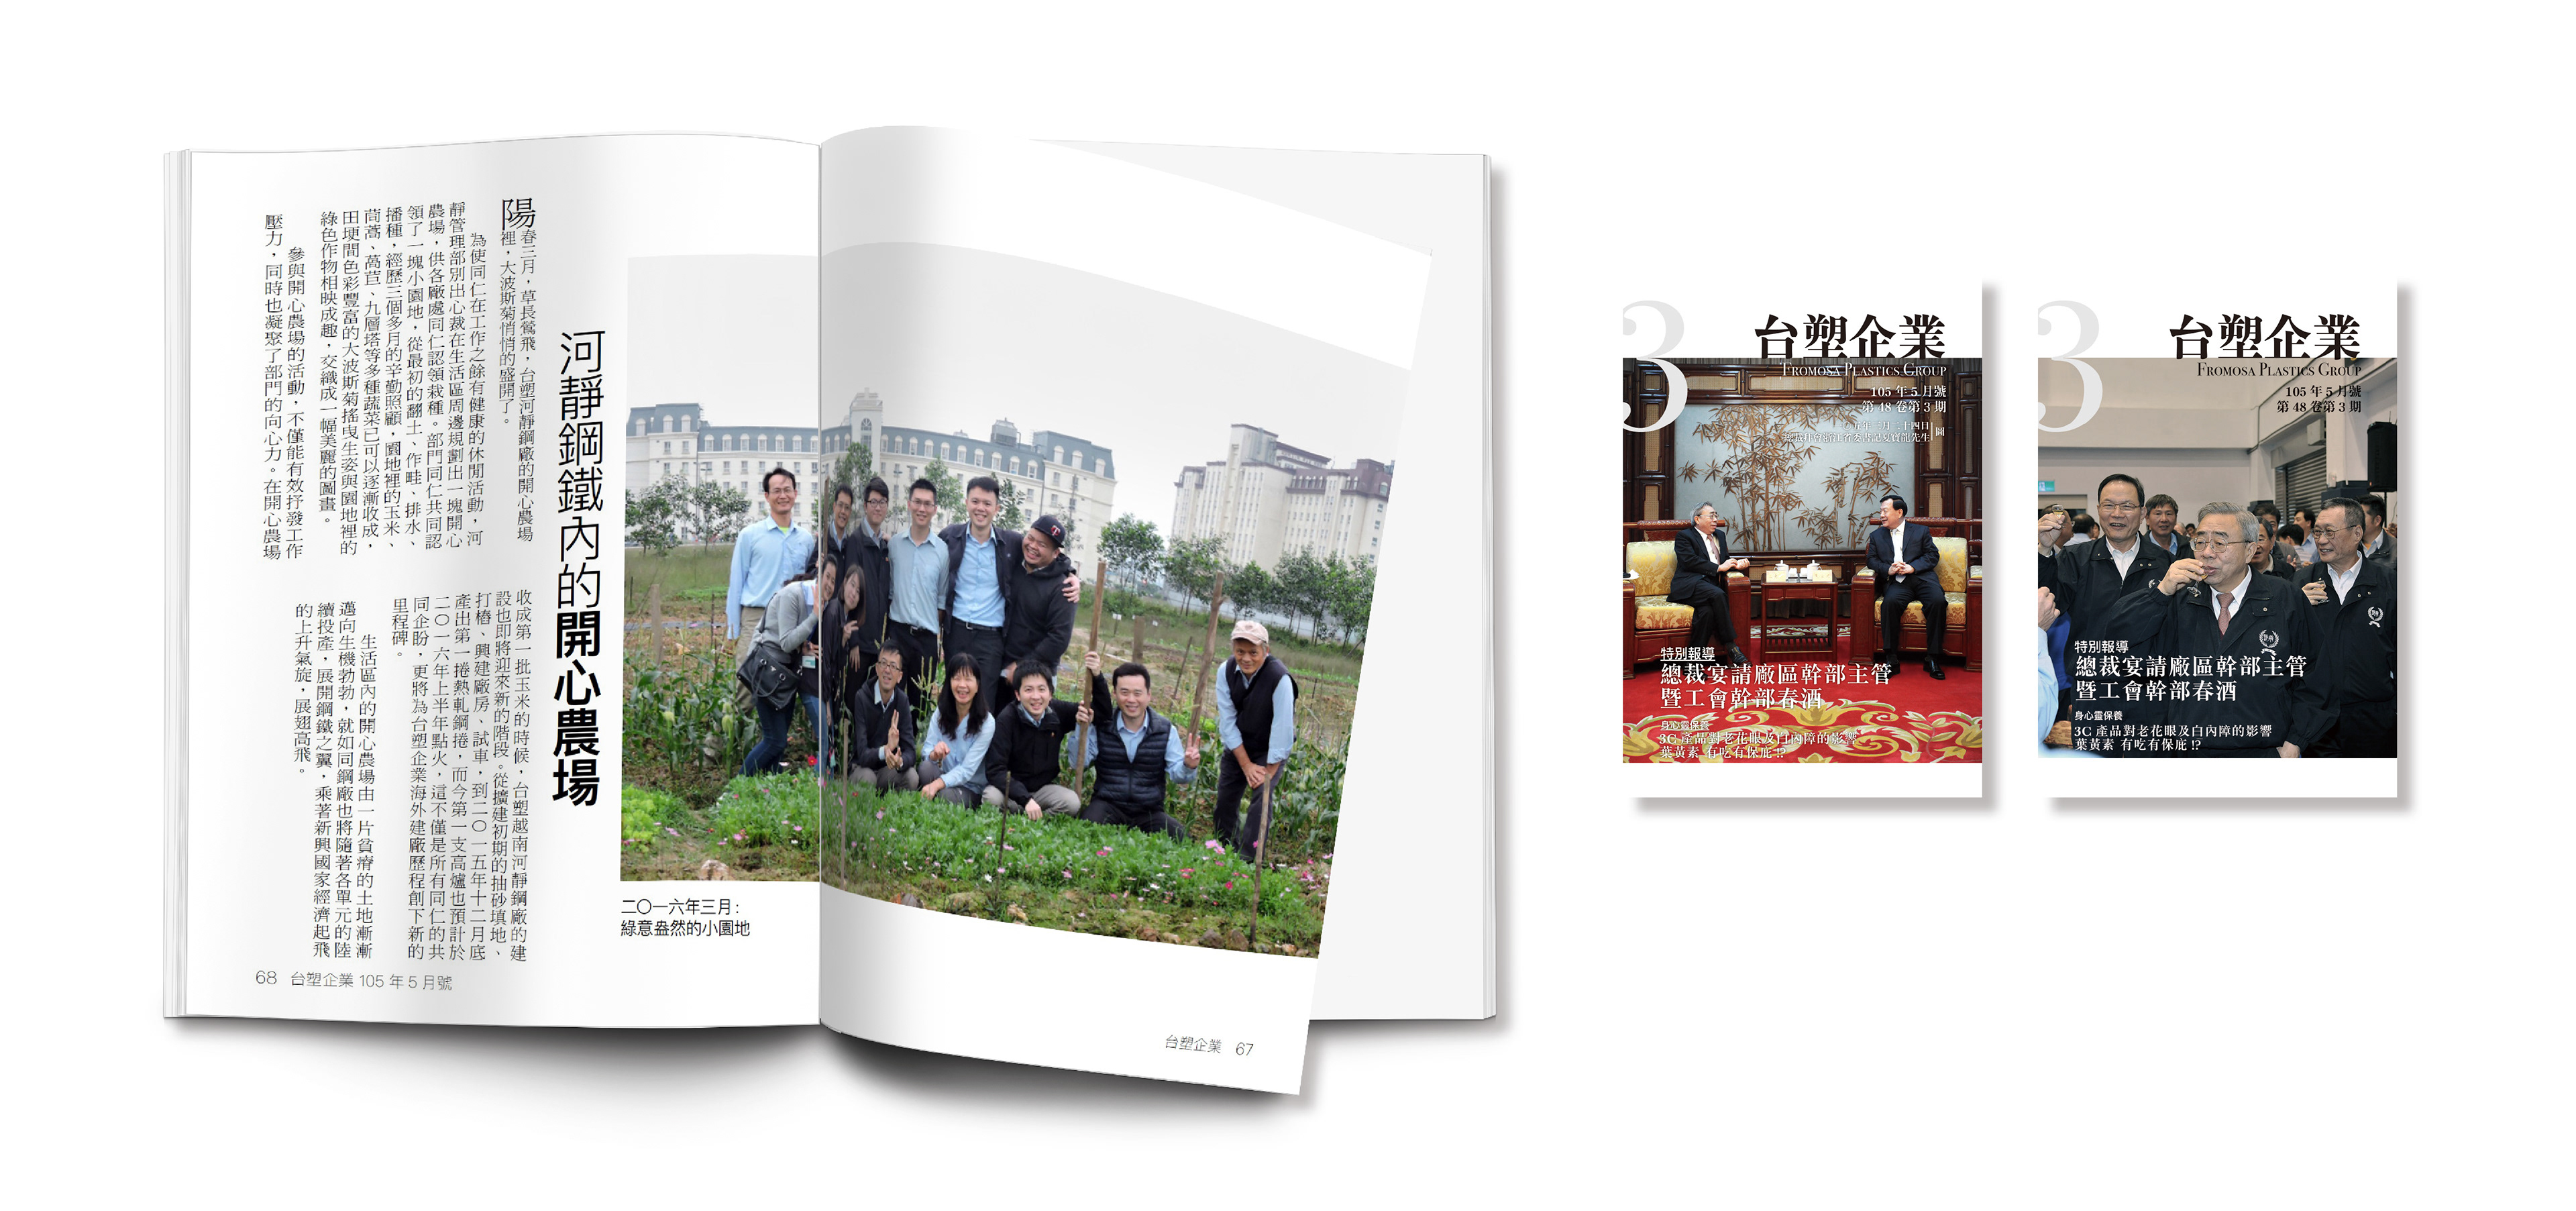 Pin Ren Huang Fpg Company Finance Magazine